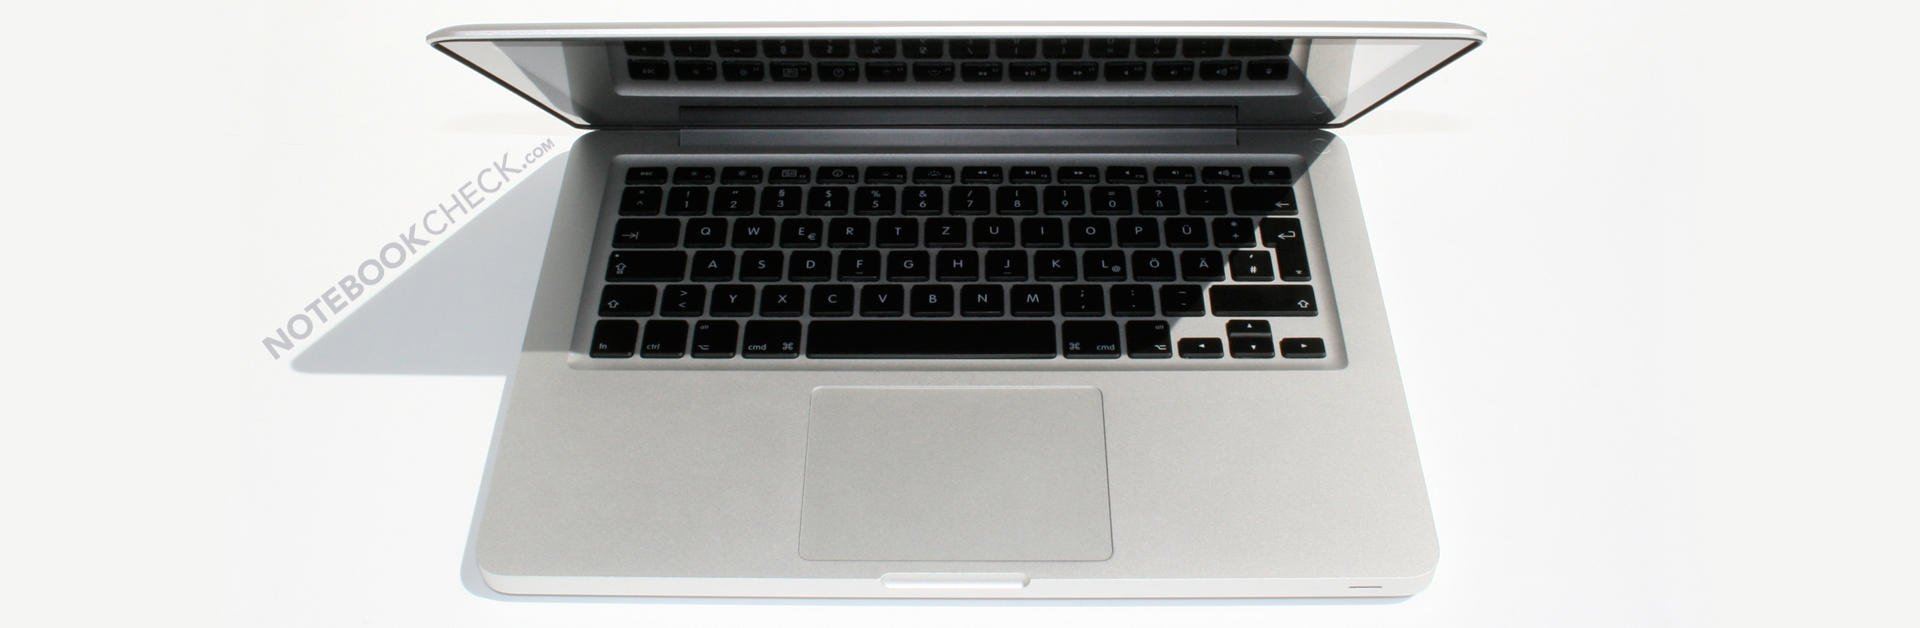 Apple macbook pro 2009 value 80 percent keyboard